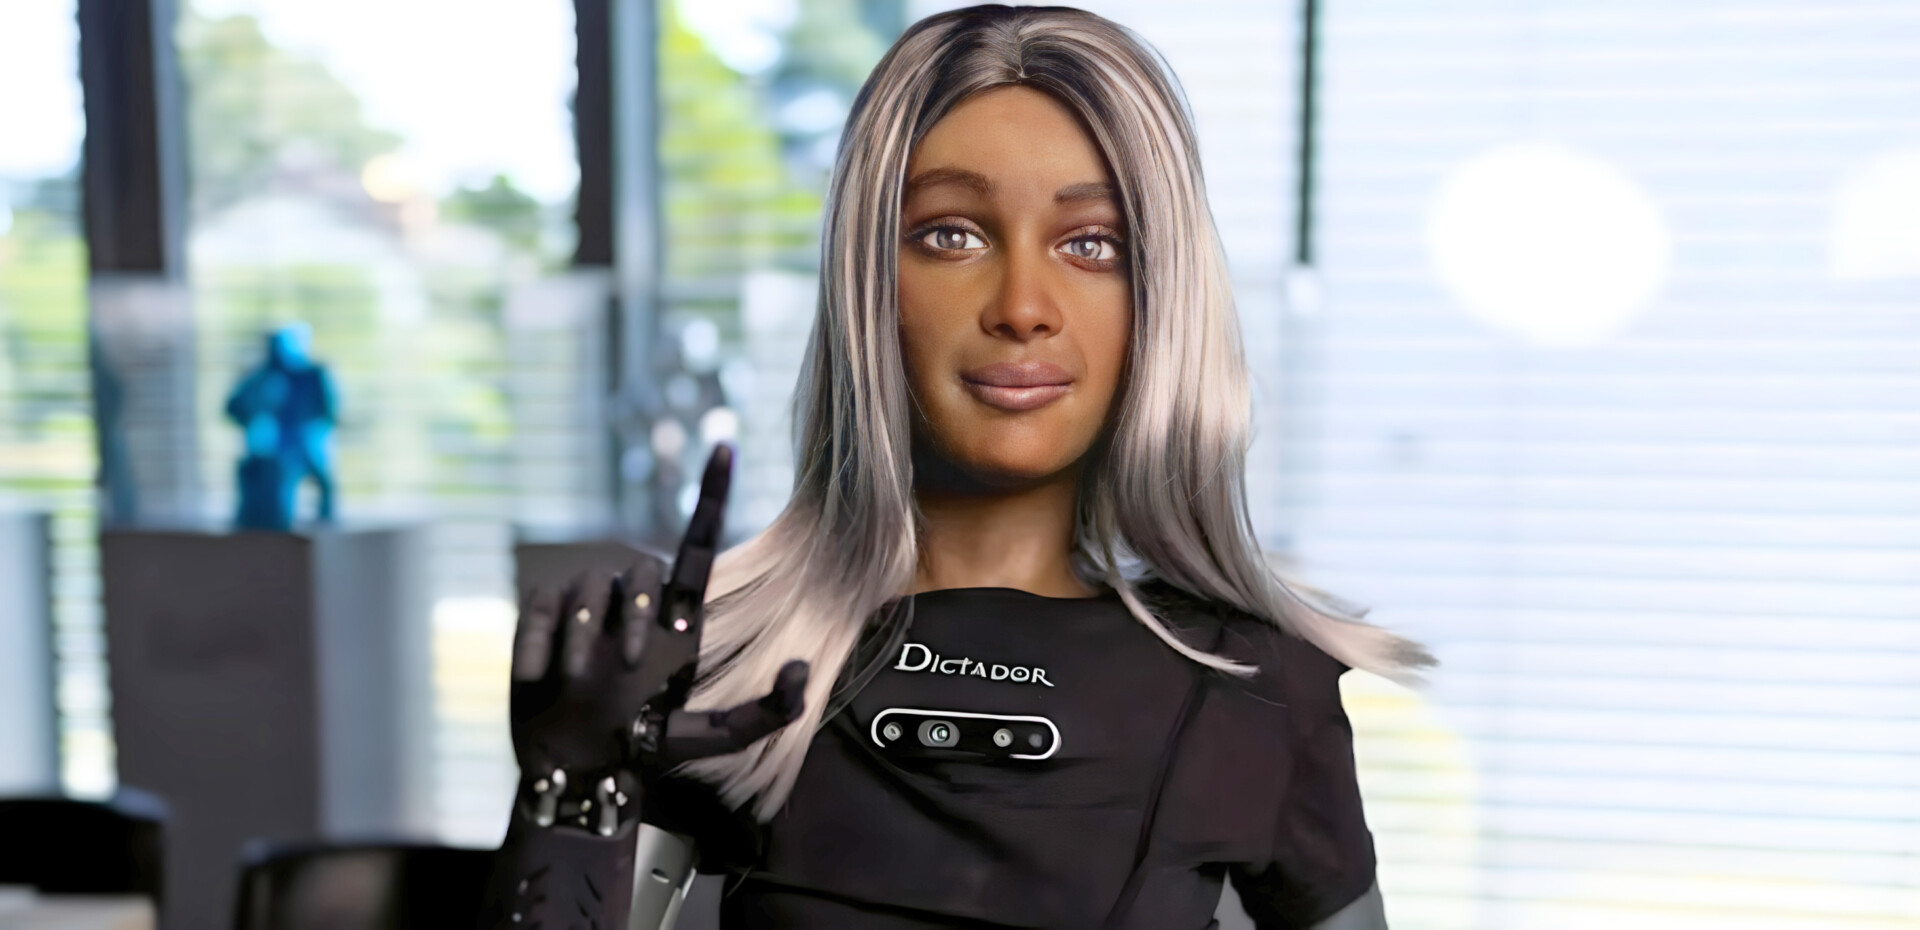 Meet the World’s First Robo-CEO